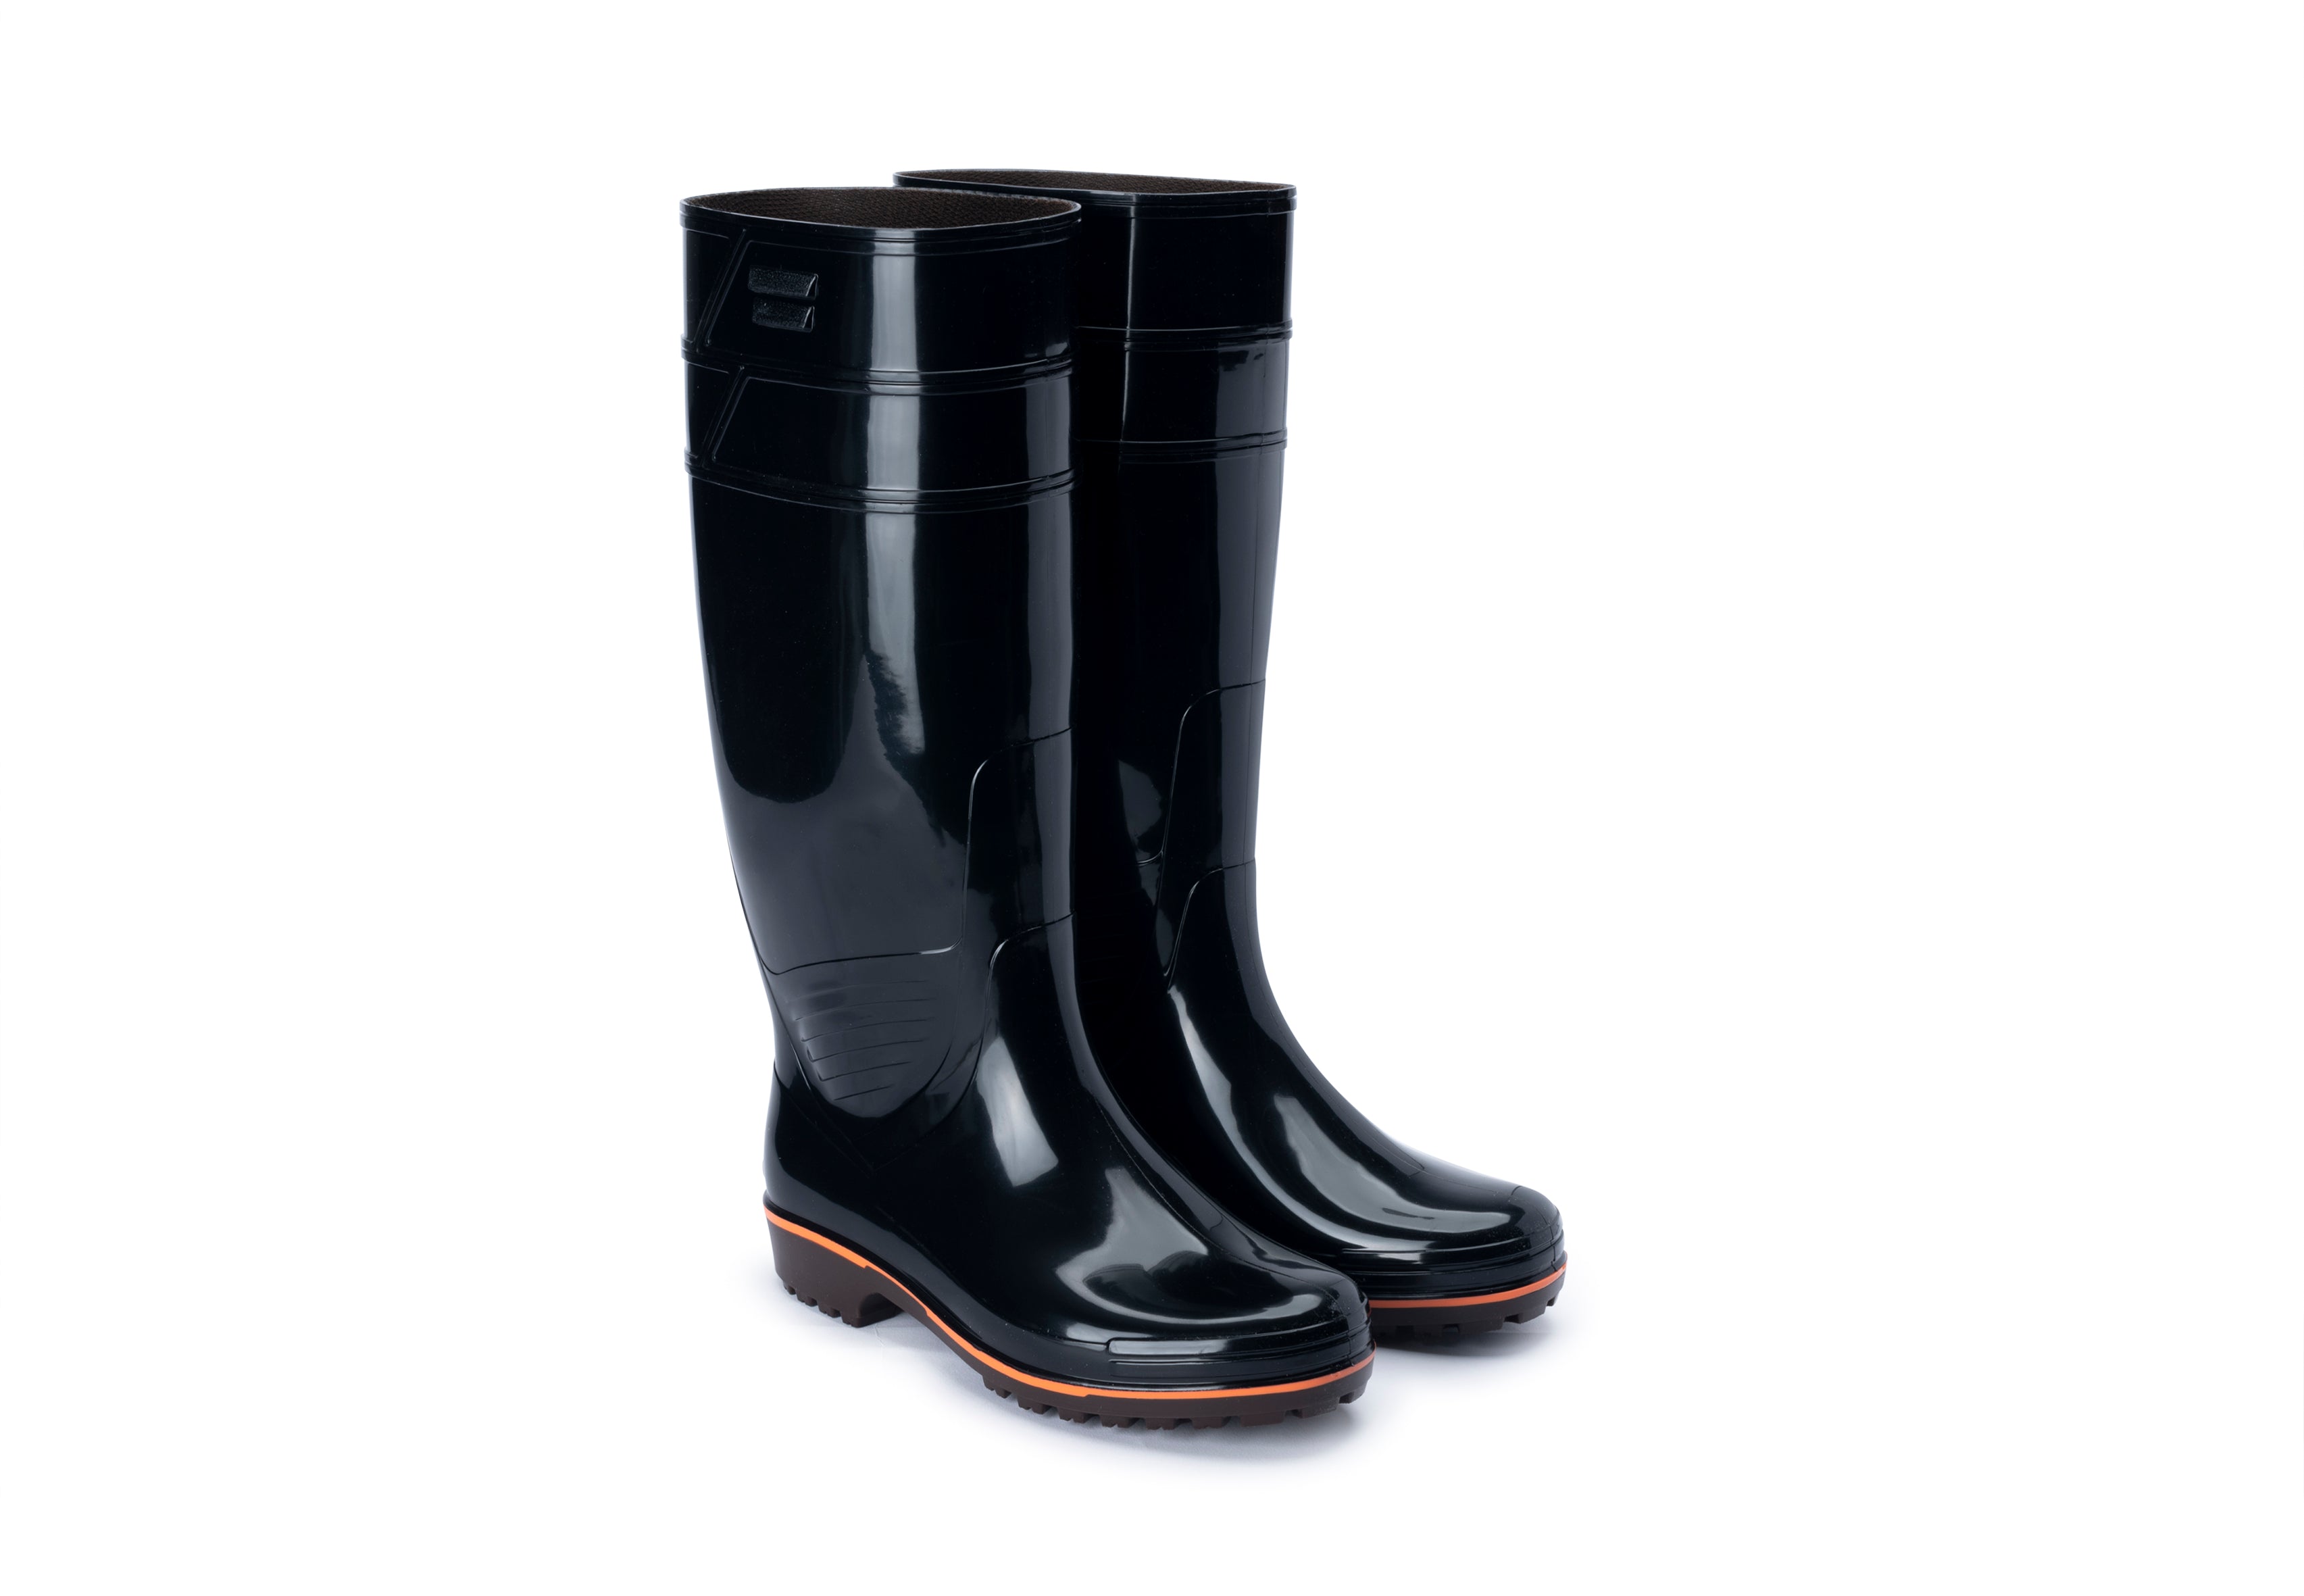 ZACTAS Z01 Extra High 40cm Rain Boots (Top Sales in Japan)-ZONA (KOHSHIN)-BK-JP/TW Size-1: 240-偉豐鞋 WELL SHOE HK-Well Shoe-偉豐鞋-偉豐網-荃灣鞋店-Functional shoes-Hong Kong Tsuen Wan Shoe Store-Tai Wan Shoe-Japan Shoe-高品質功能鞋-台灣進口鞋-日本進口鞋-High-quality shoes-鞋類配件-荃灣進口鞋-香港鞋店-優質鞋類產品-水靴-帆布鞋-廚師鞋-香港鞋品牌-Hong Kong Shoes brand-長者鞋-Hong Kong Rain Boots-Kitchen shoes-Cruthes-Slipper-Well Shoe Hong Kong-Anello-Arriba-休閒鞋-舒適鞋-健康鞋-皮鞋-Healthy shoes-Leather shoes-Hiking shoes